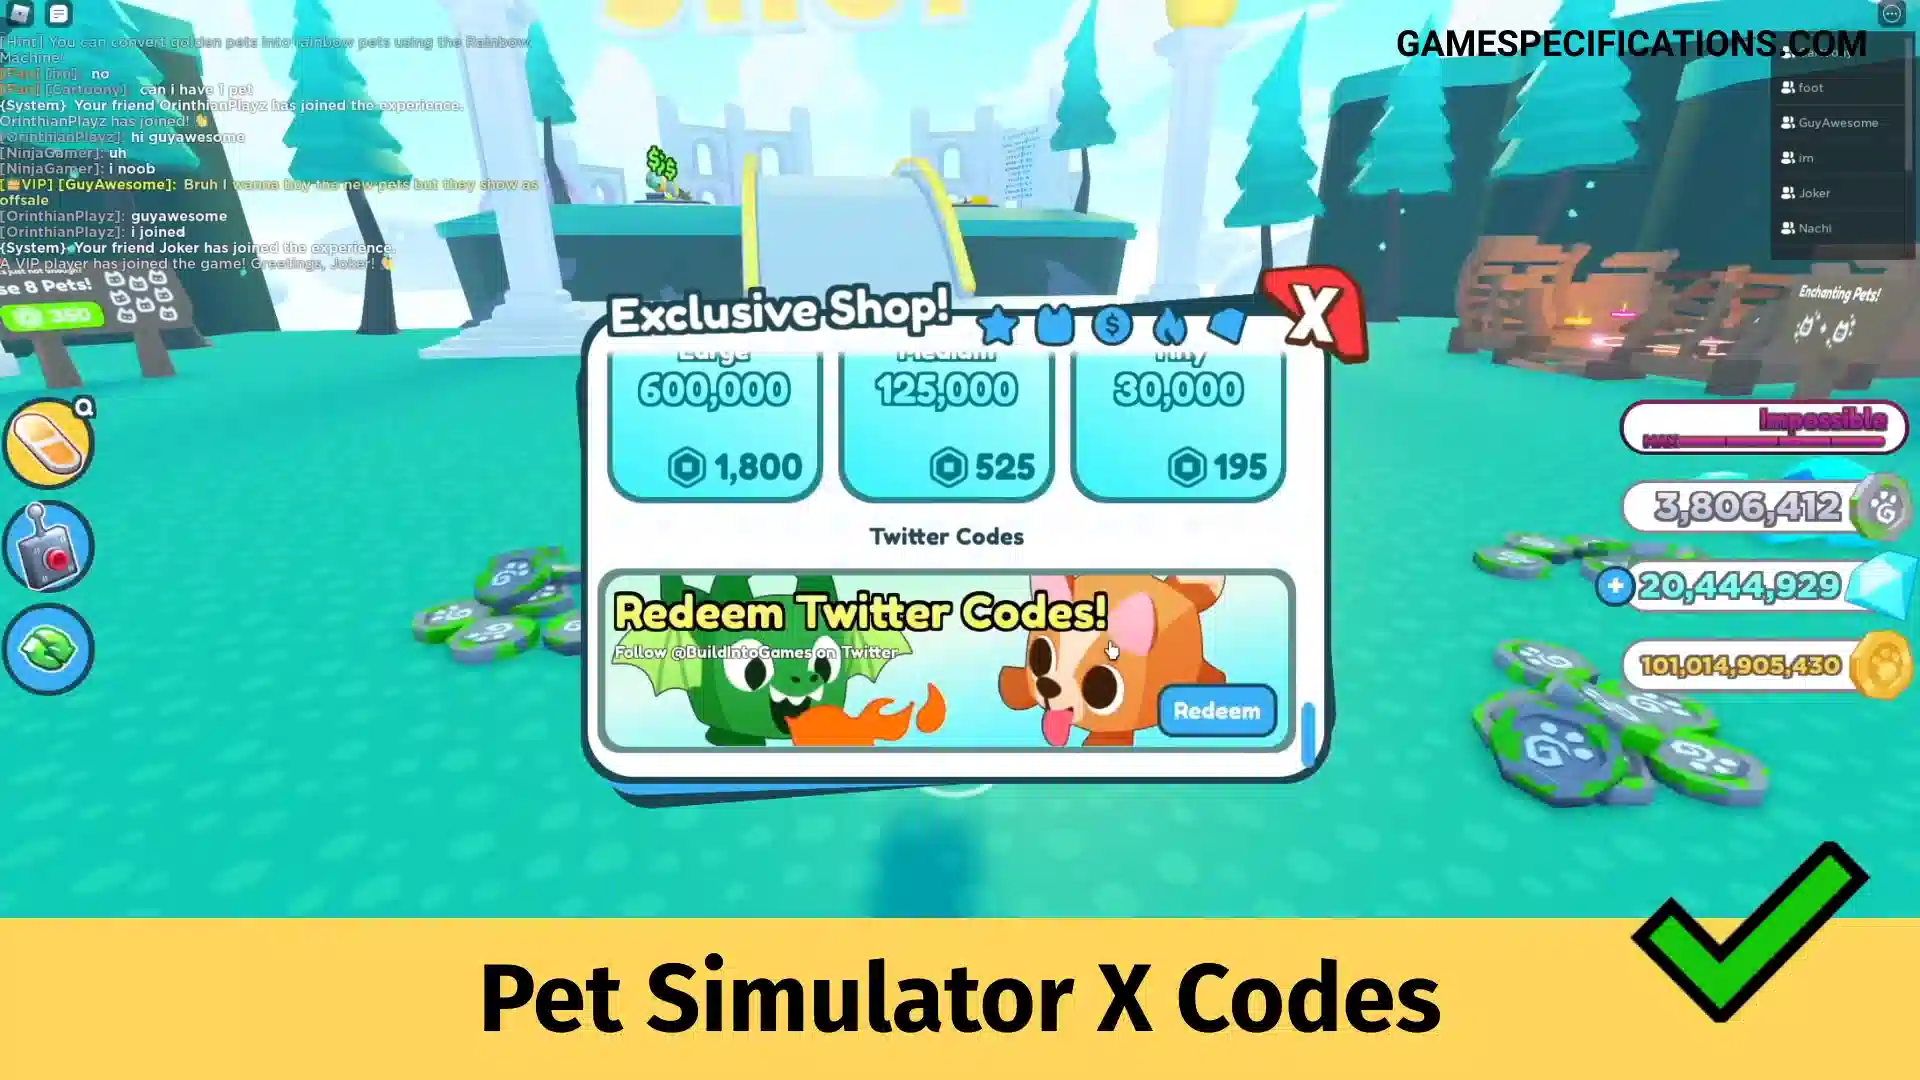 Exclusive x codes pets simulator pet Codes (Pet